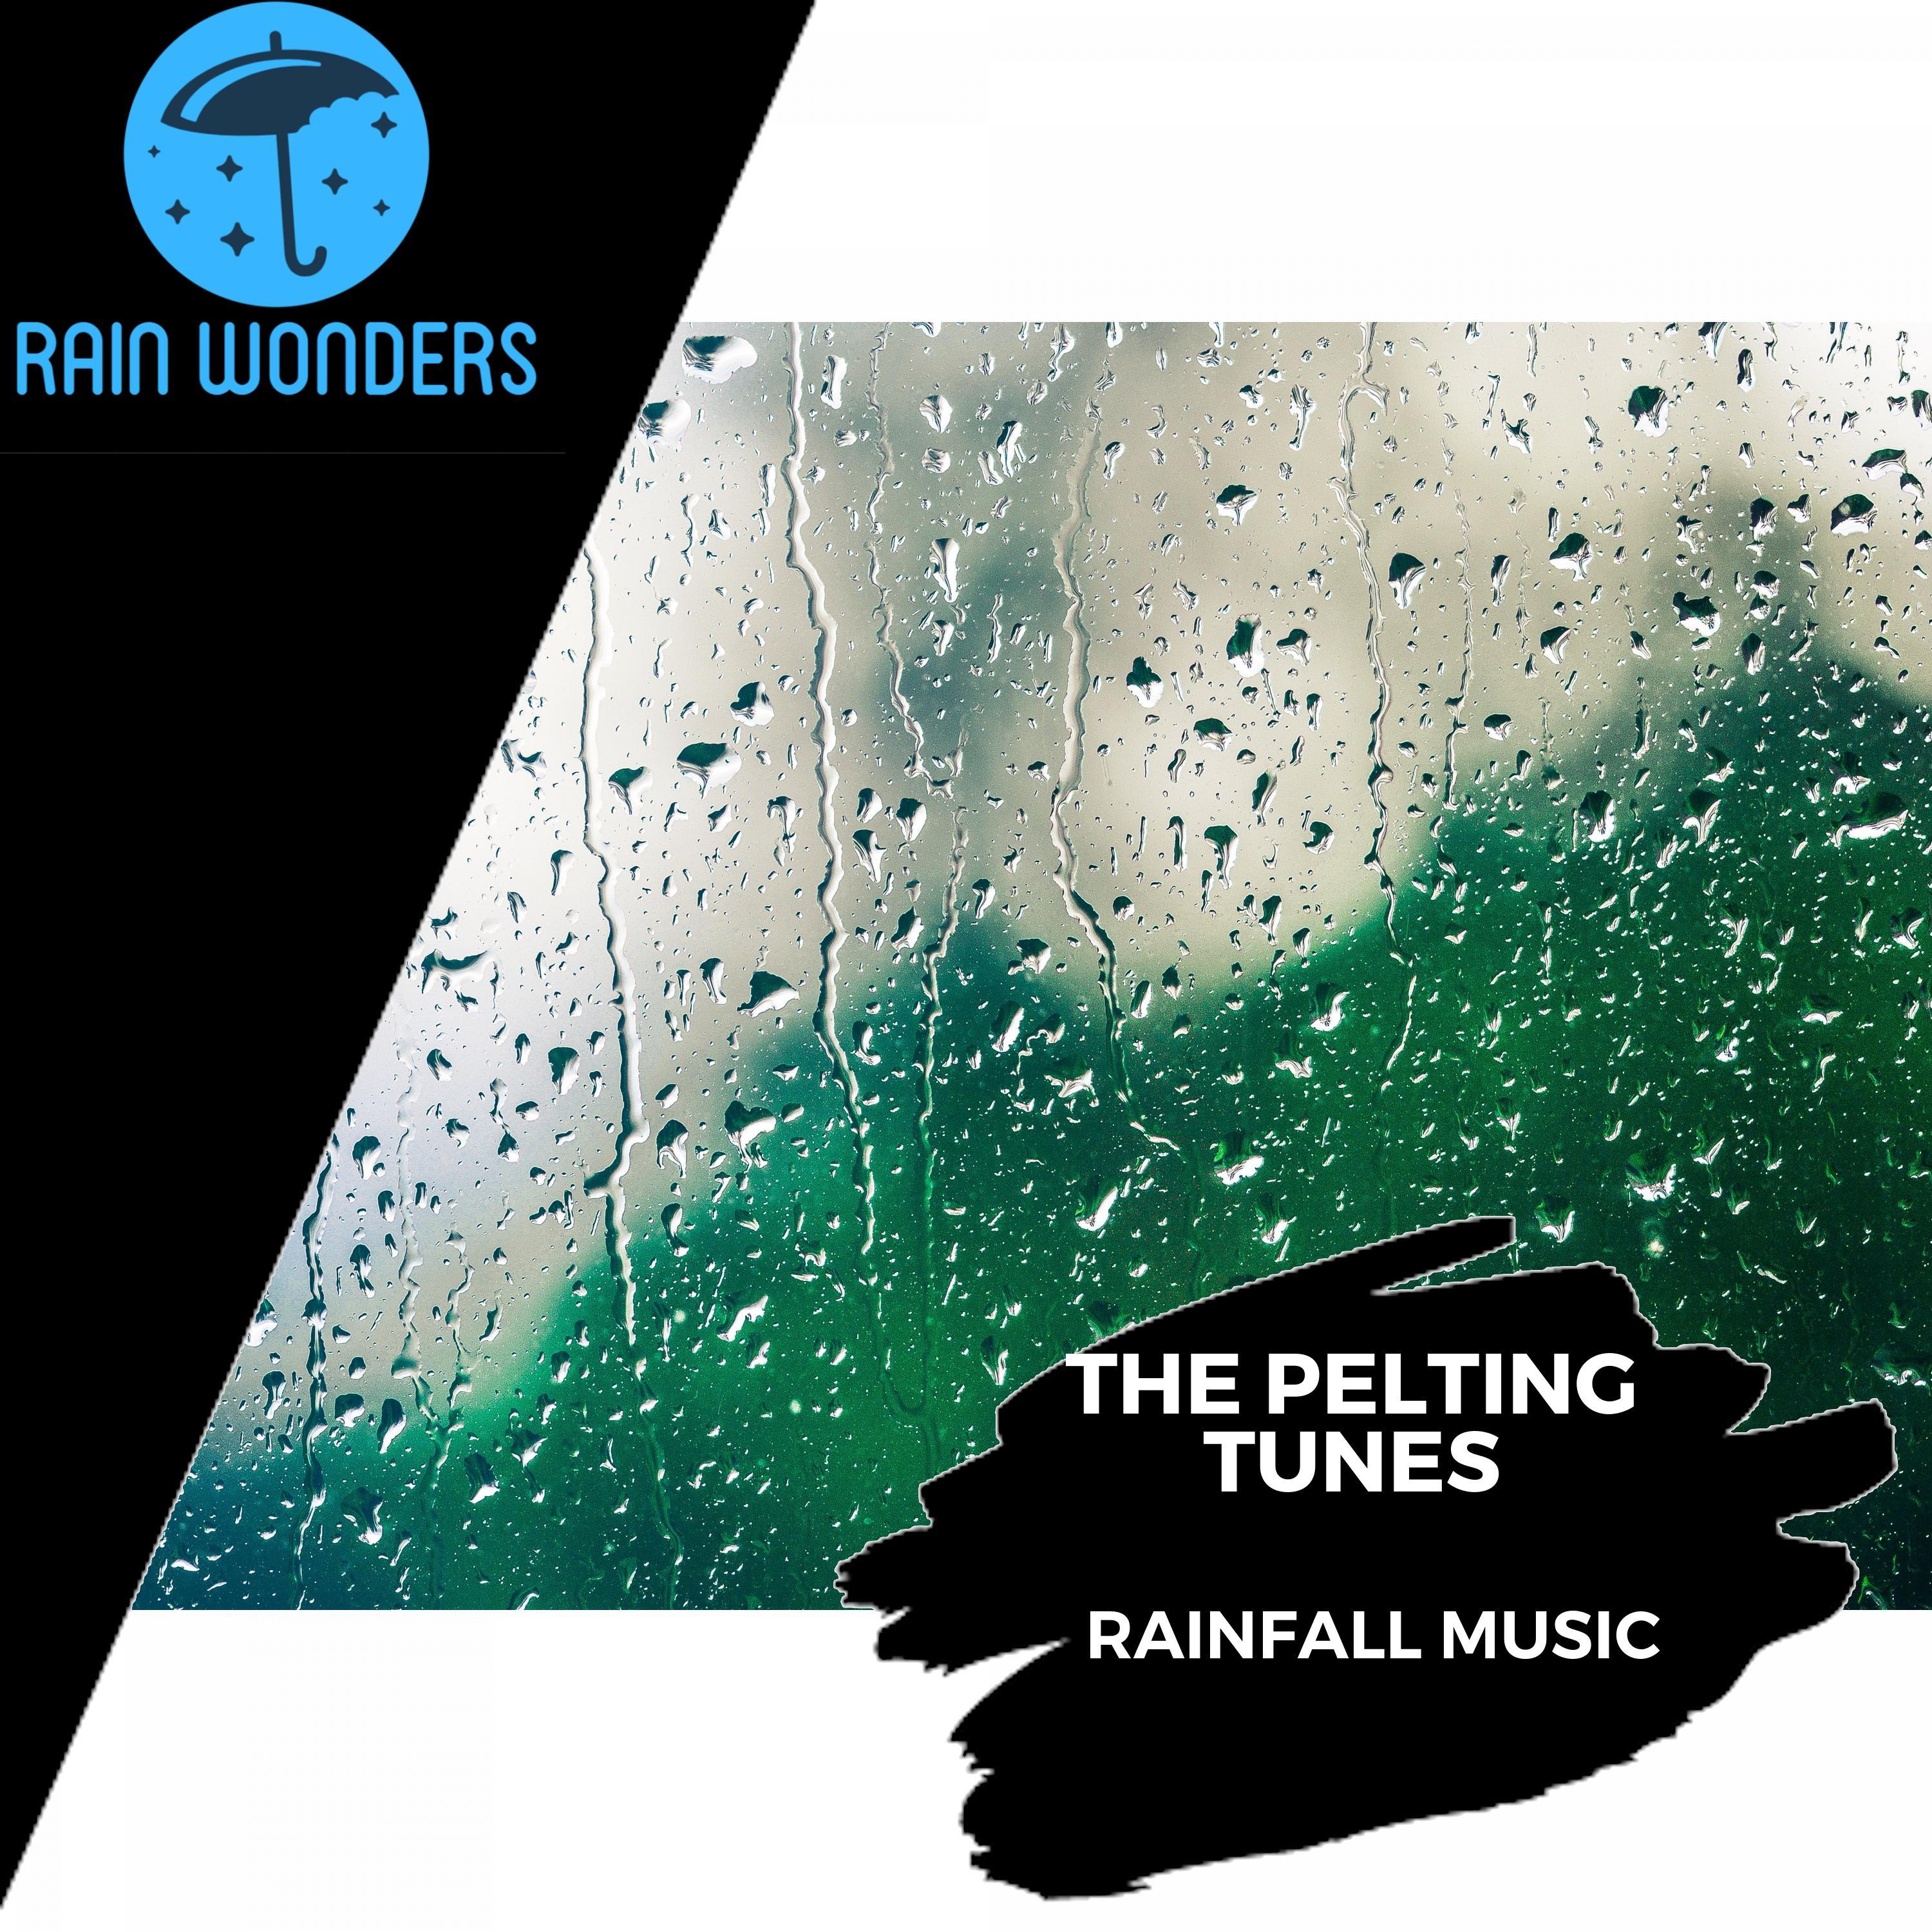 Grooming Rain Melodies - The Rain of Despair